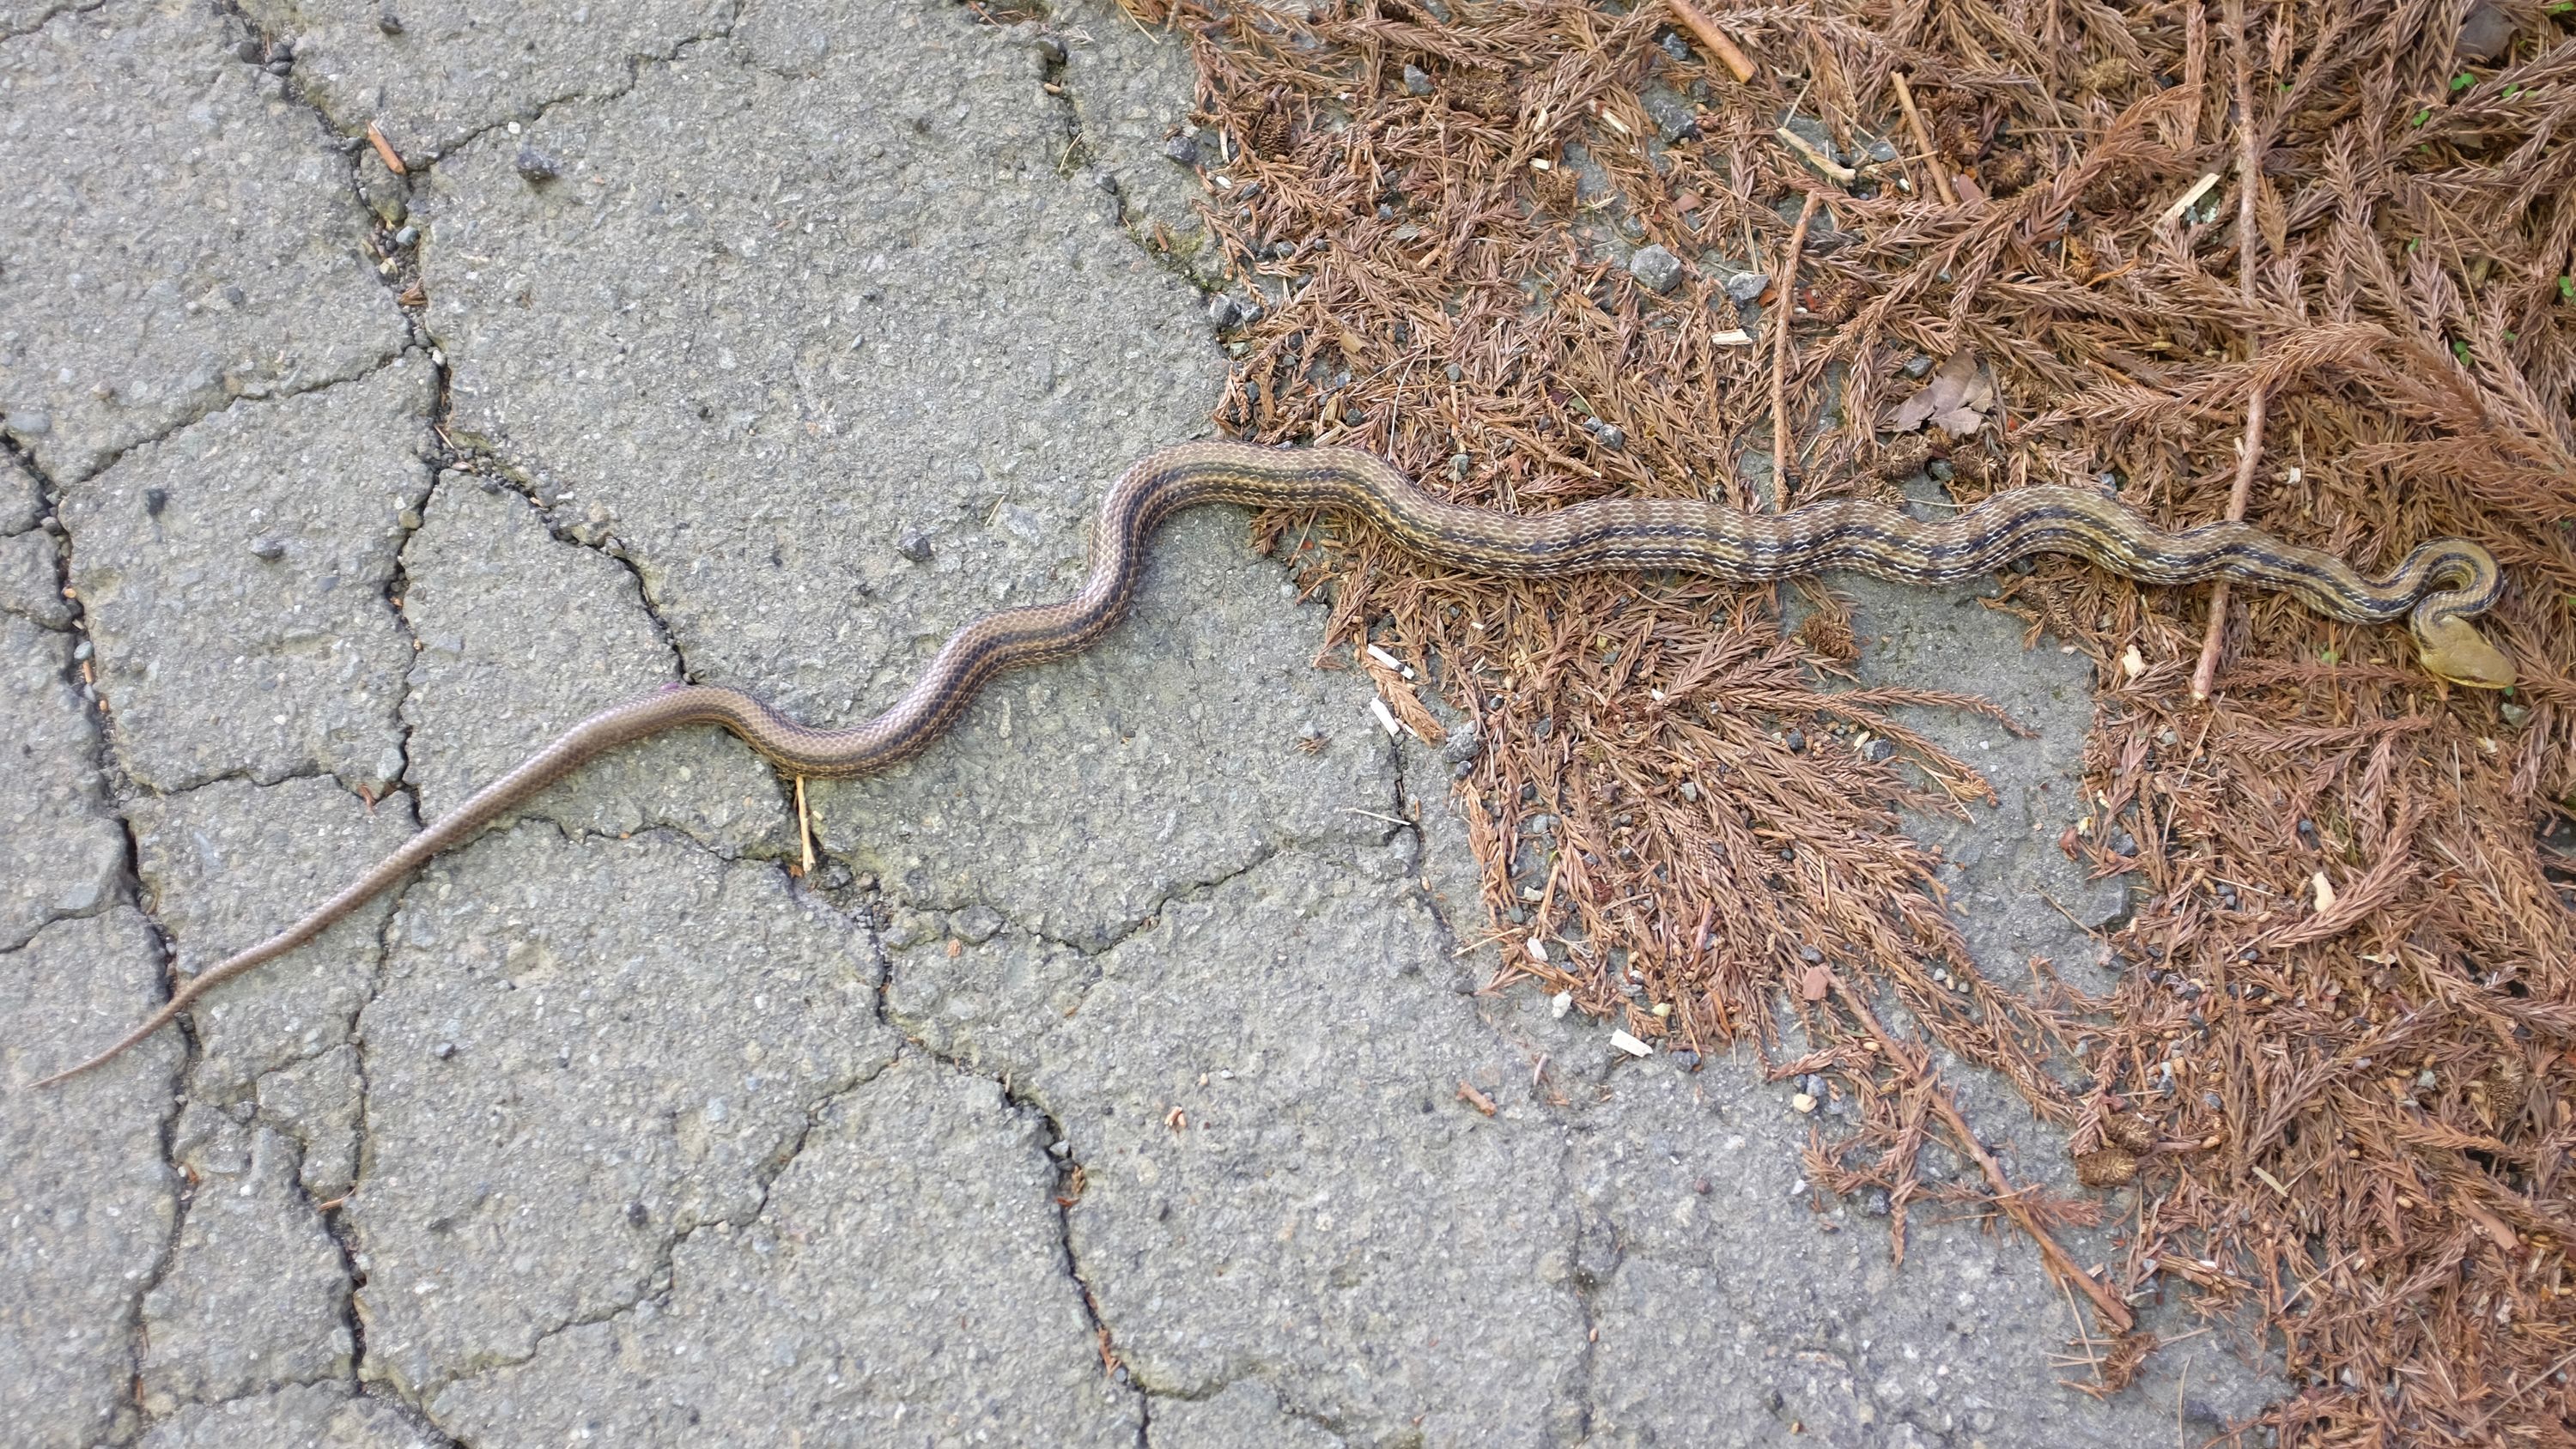 Japanese striped snake on the road in Eshiro, Kumamoto. Photo: Peter Orosz